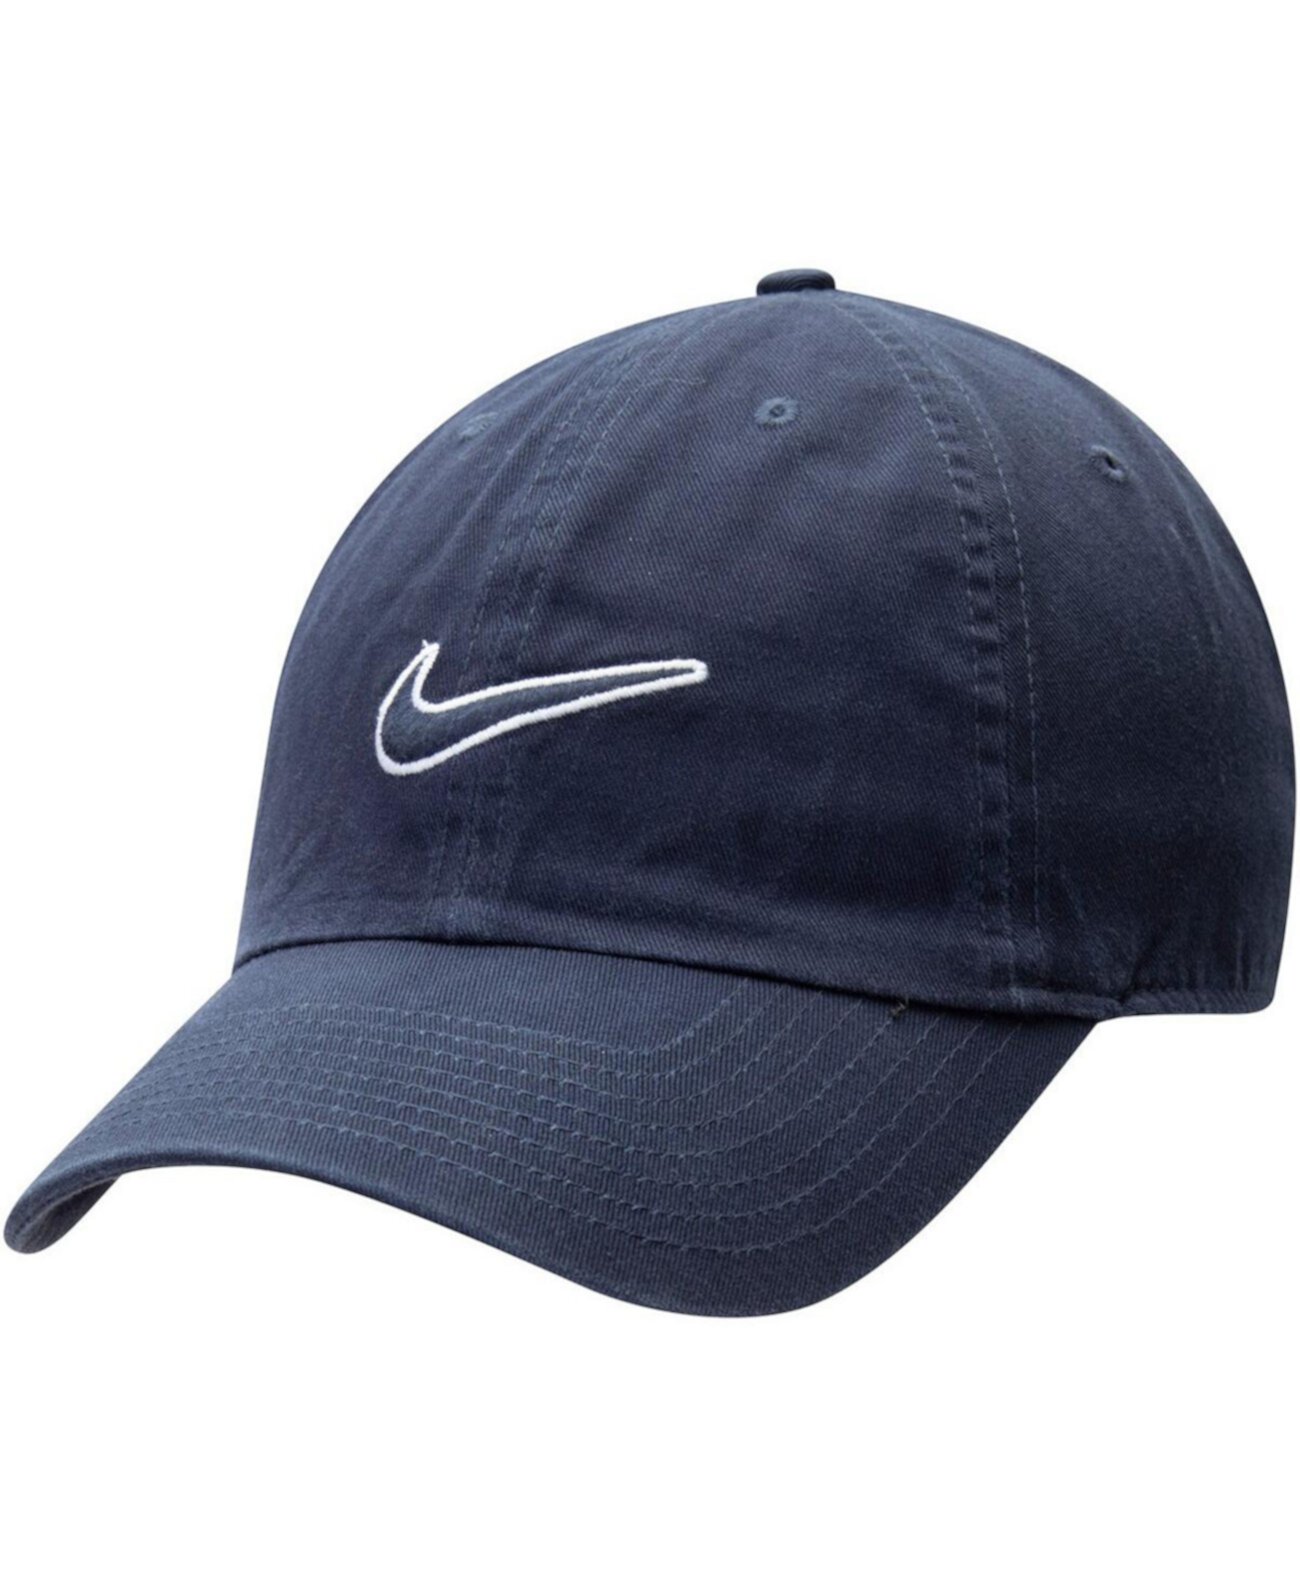 Мужская регулируемая шляпа Navy Heritage 86 Essential Nike